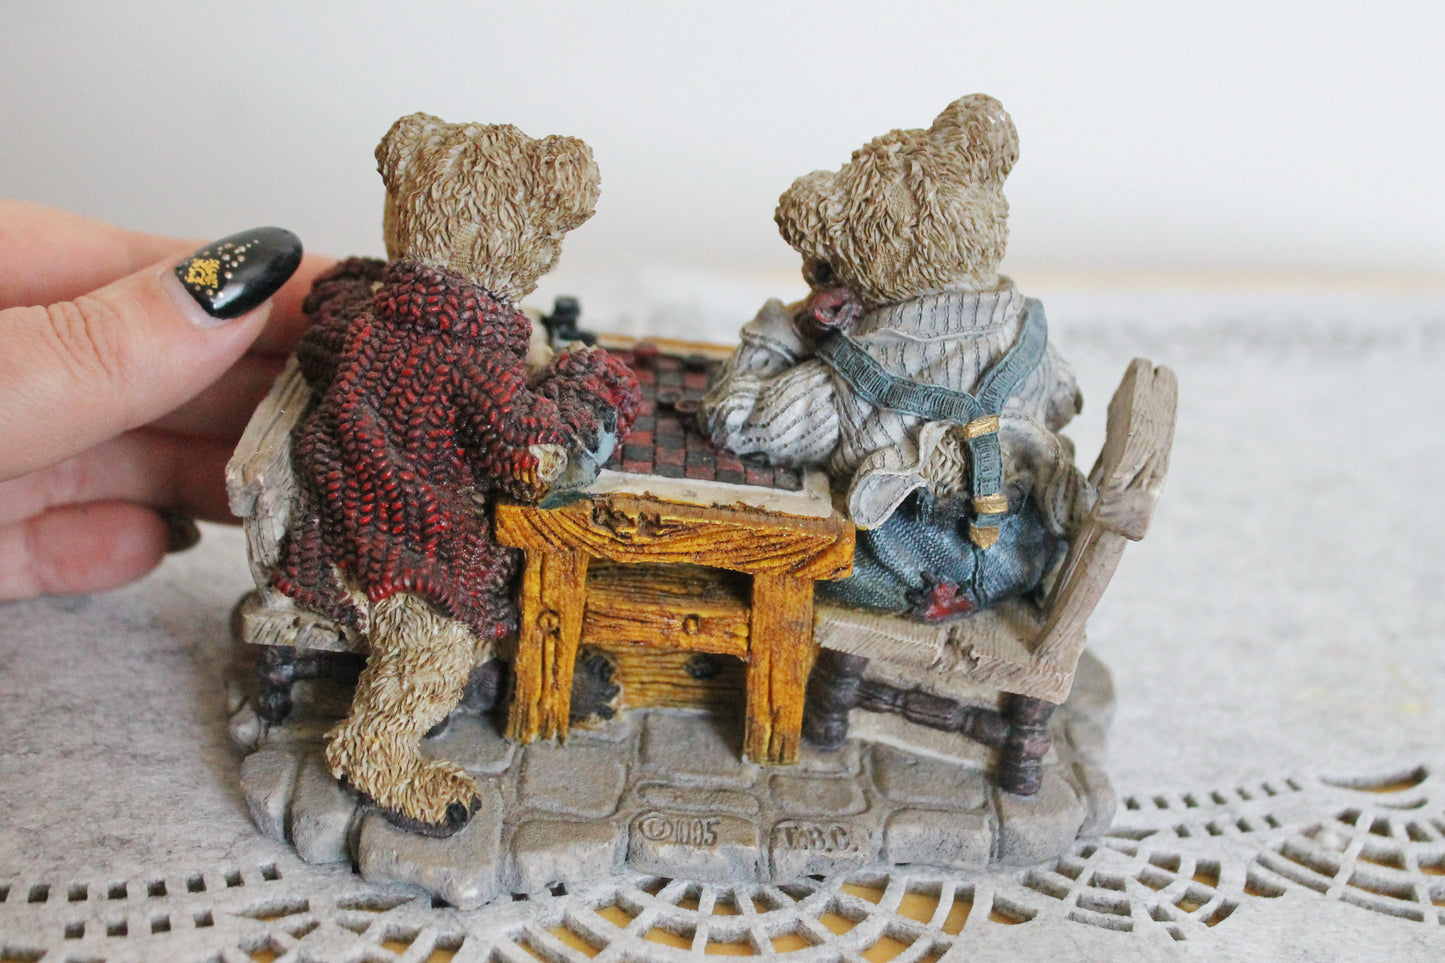 Vintage figurine made of gypsum - Bear family playing checkers - vintage decor - 1996 - vintage figurine - collectible gift